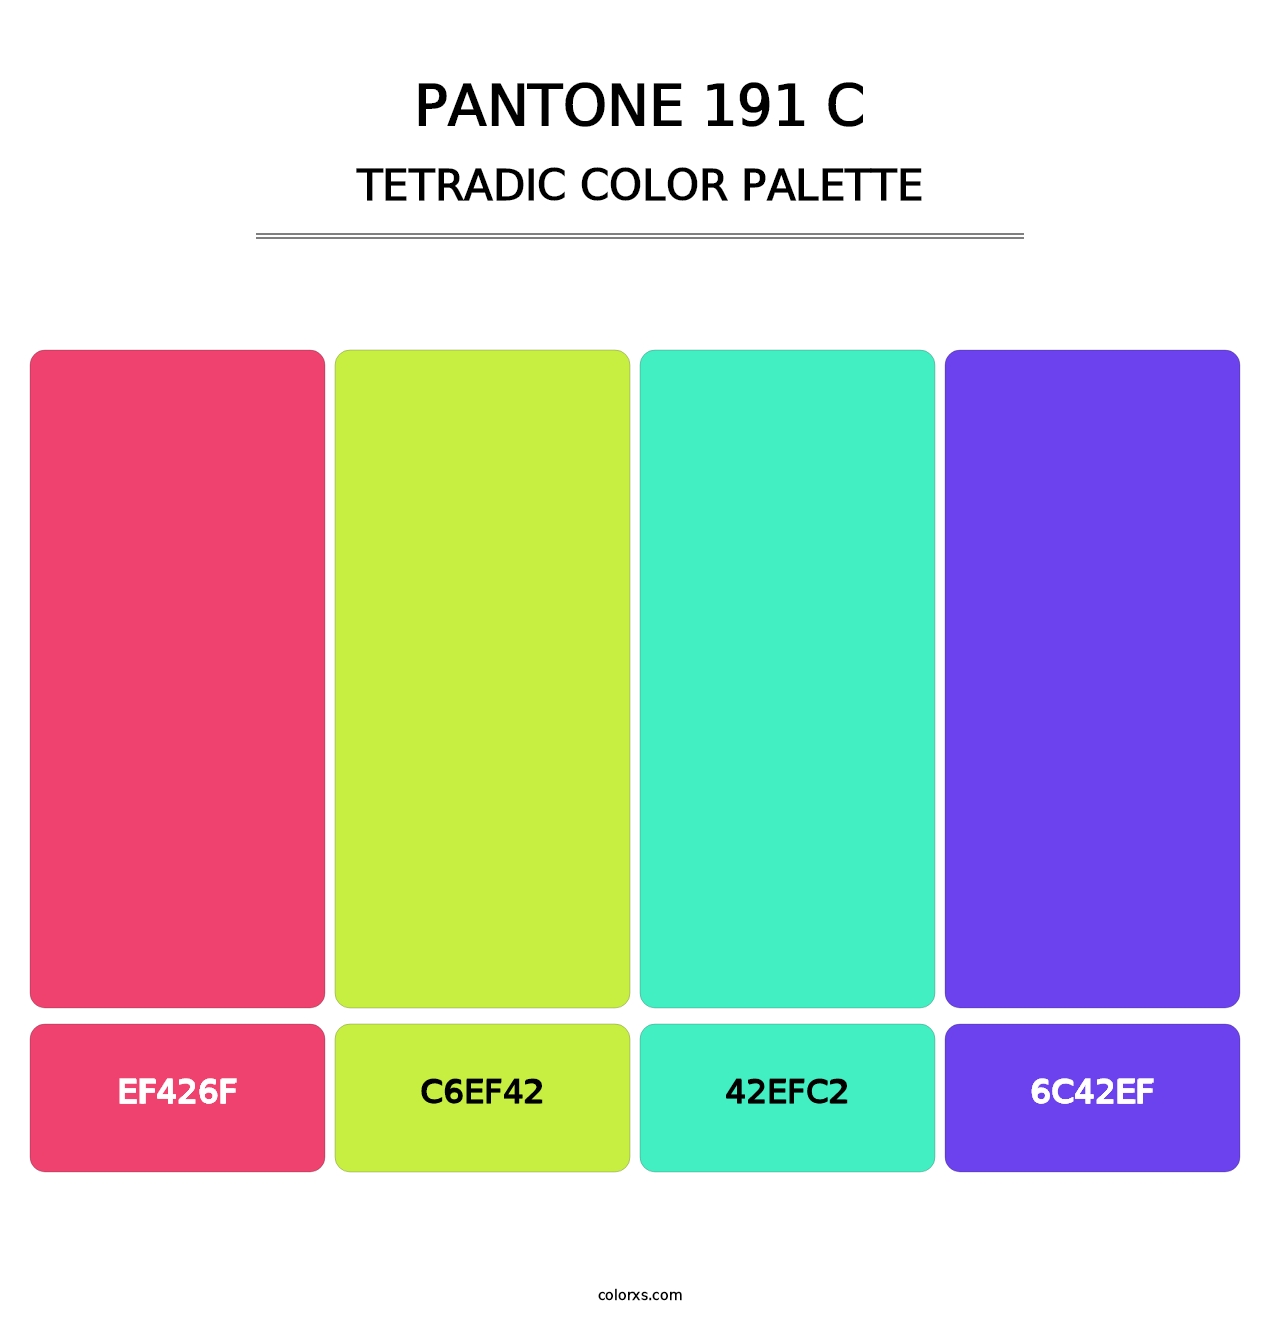 PANTONE 191 C - Tetradic Color Palette